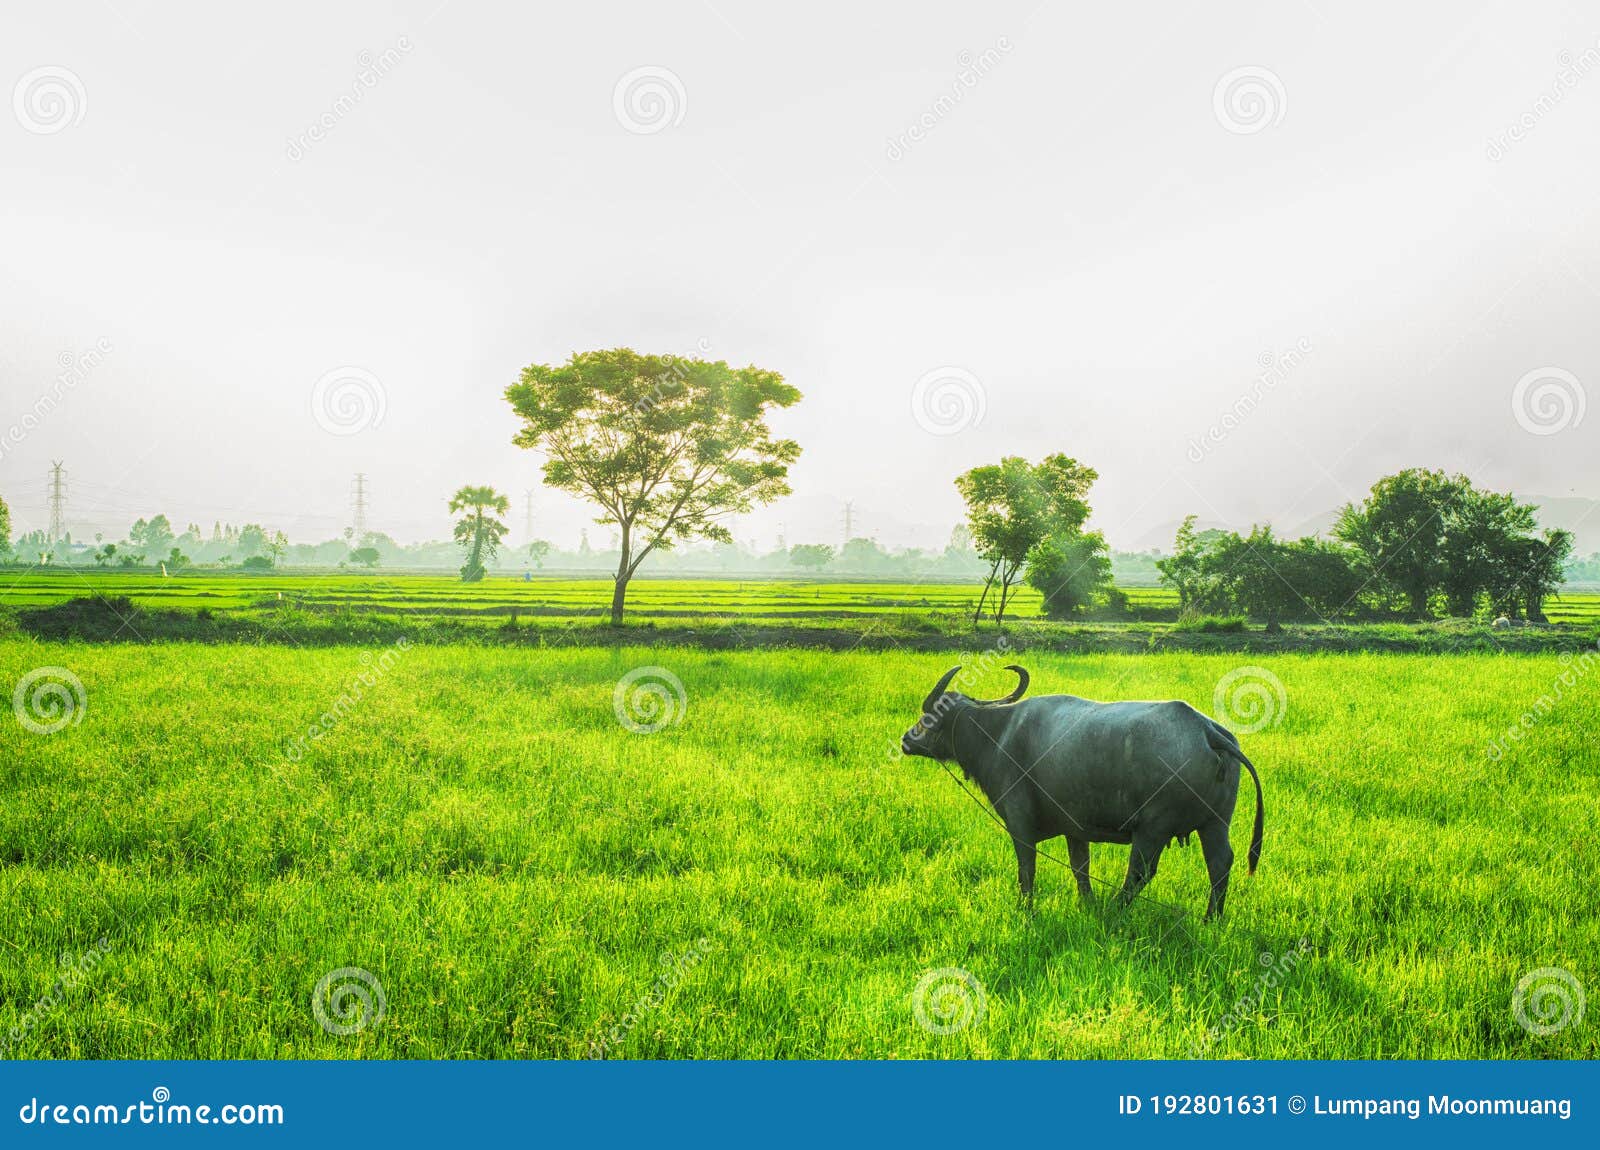 buffalo animal on farmland with green grass backgrounds on countyside, thailand